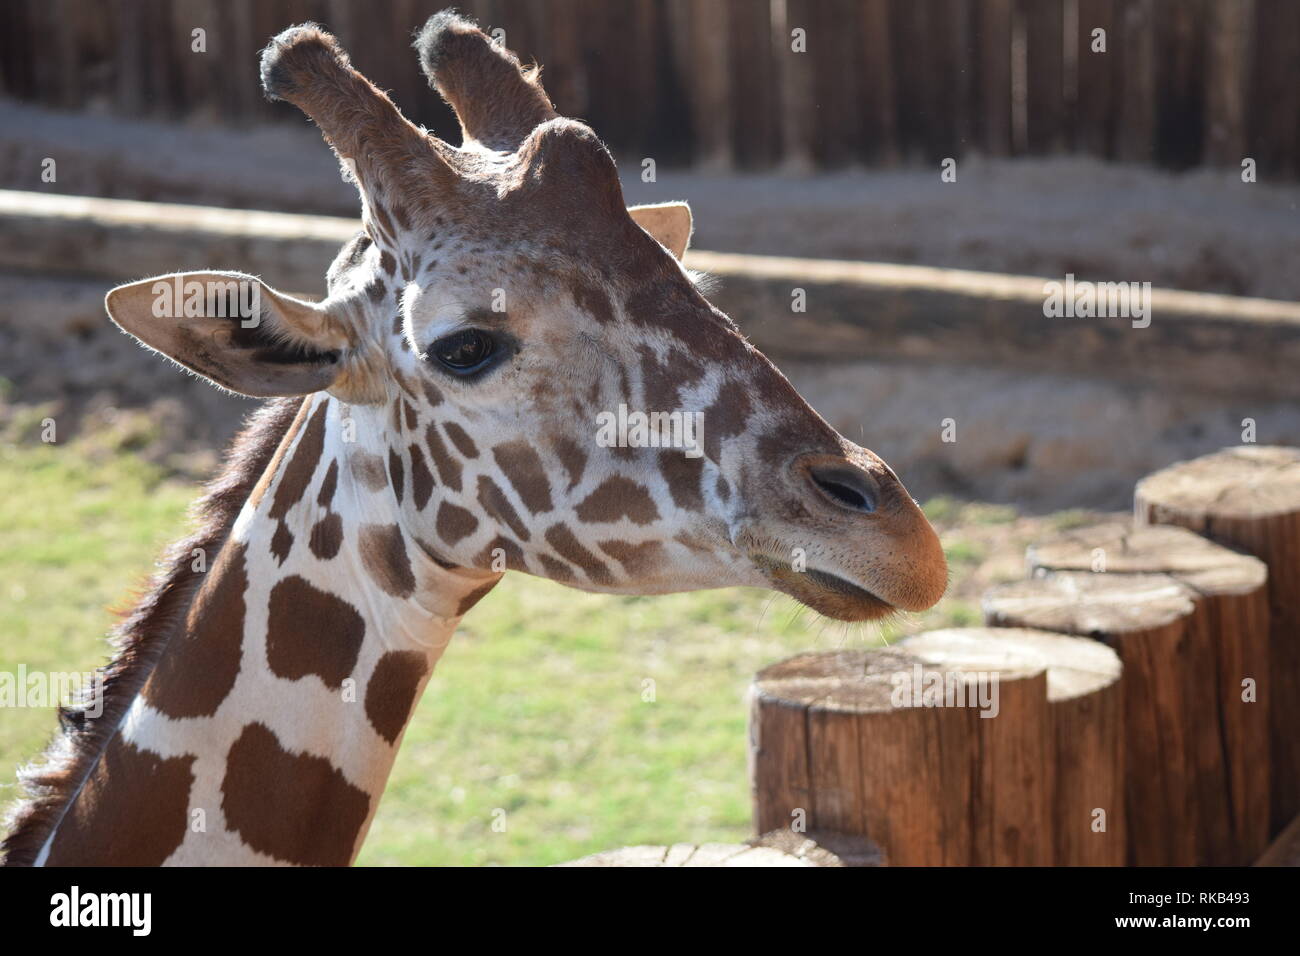 Giraffe in various poses Stock Photo